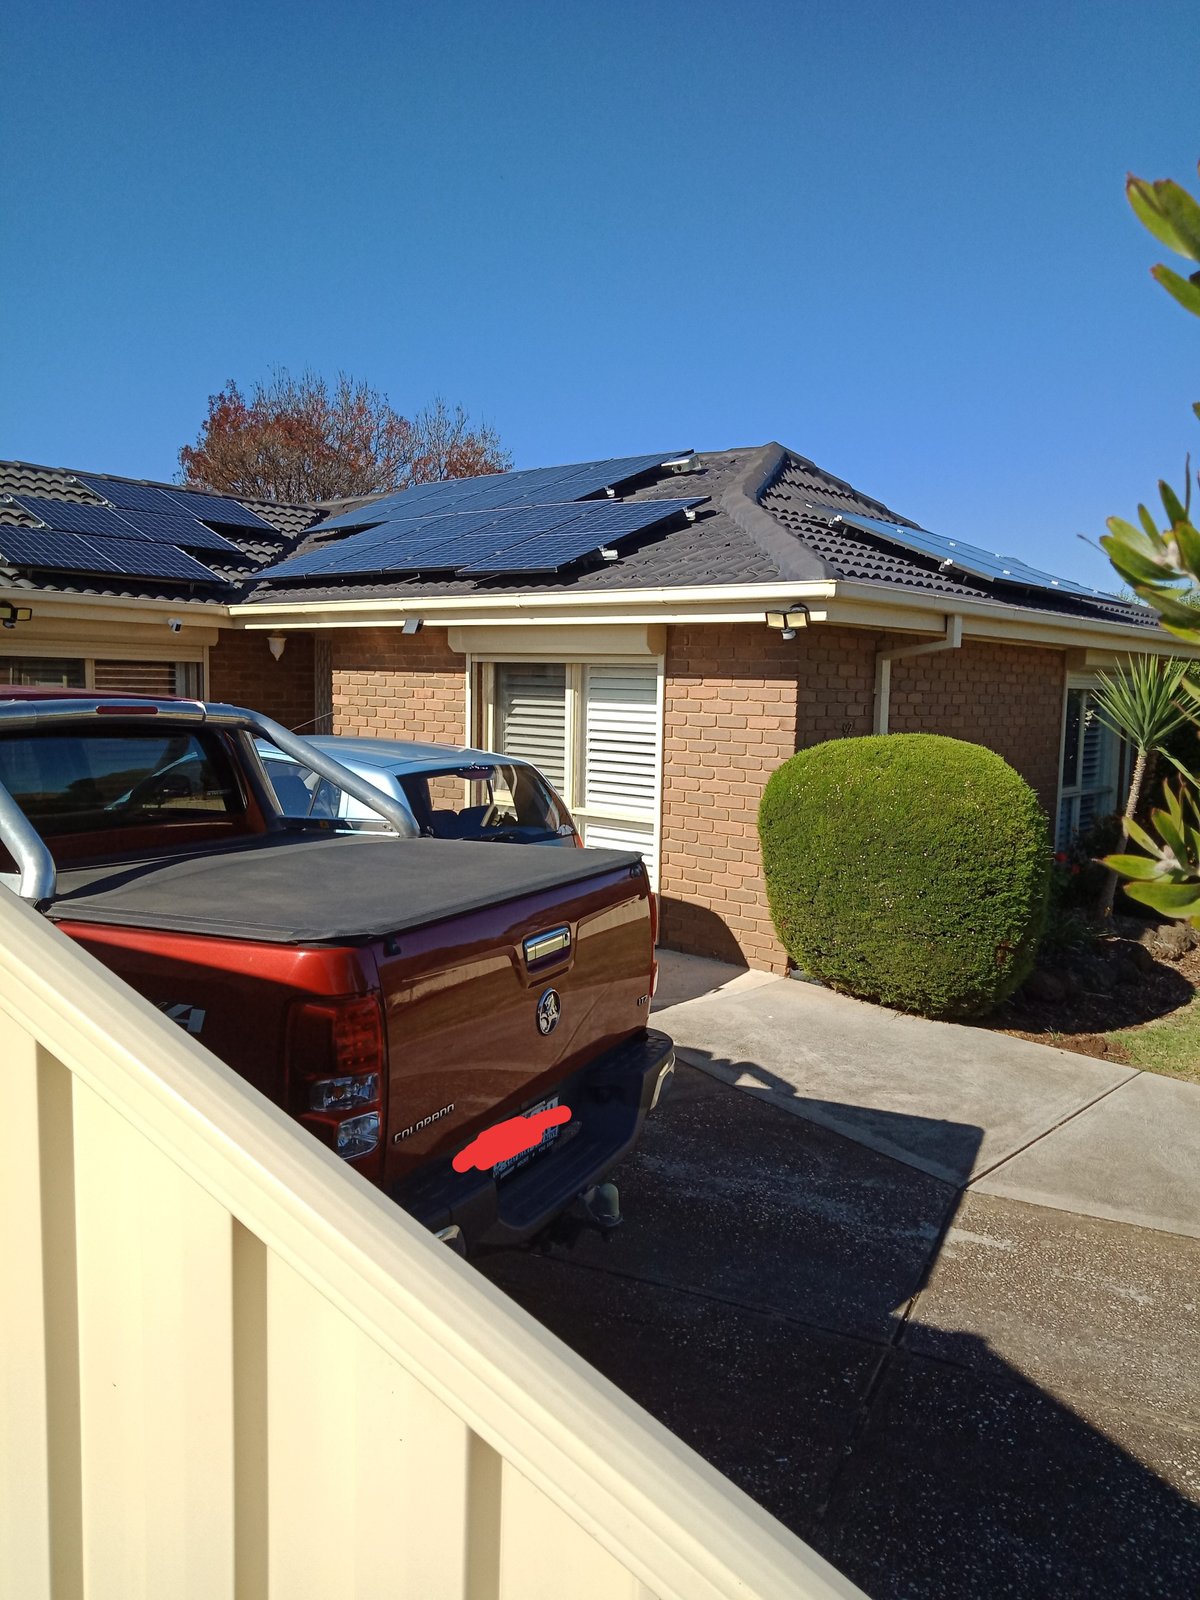 alliance-solar-reviews-73-713-solar-installer-reviews-solarquotes